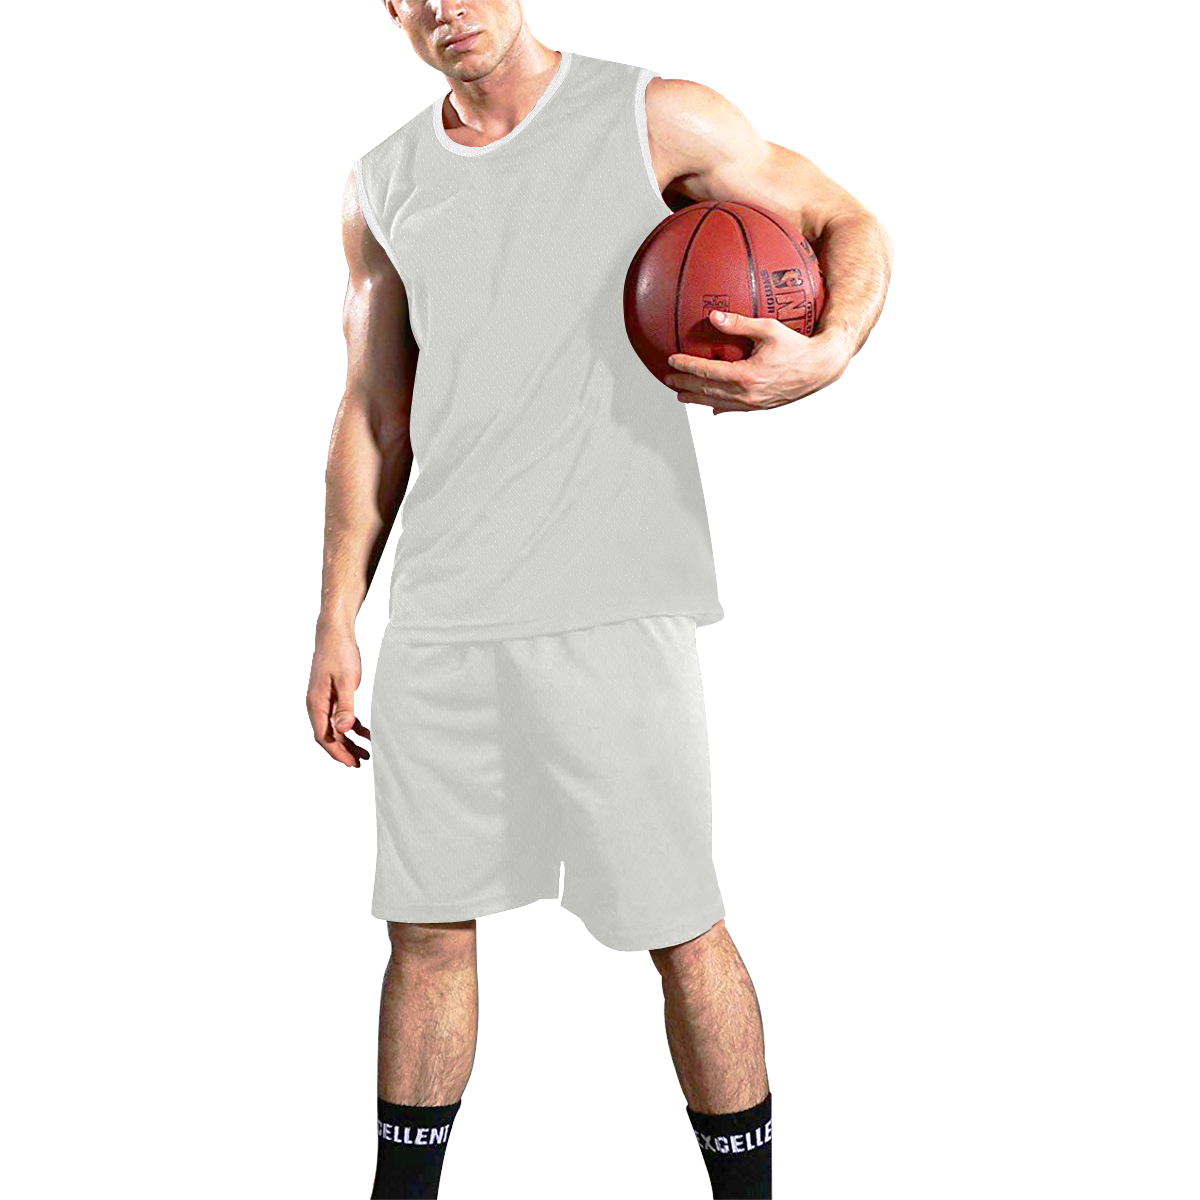 color platinum All Over Print Basketball Uniform